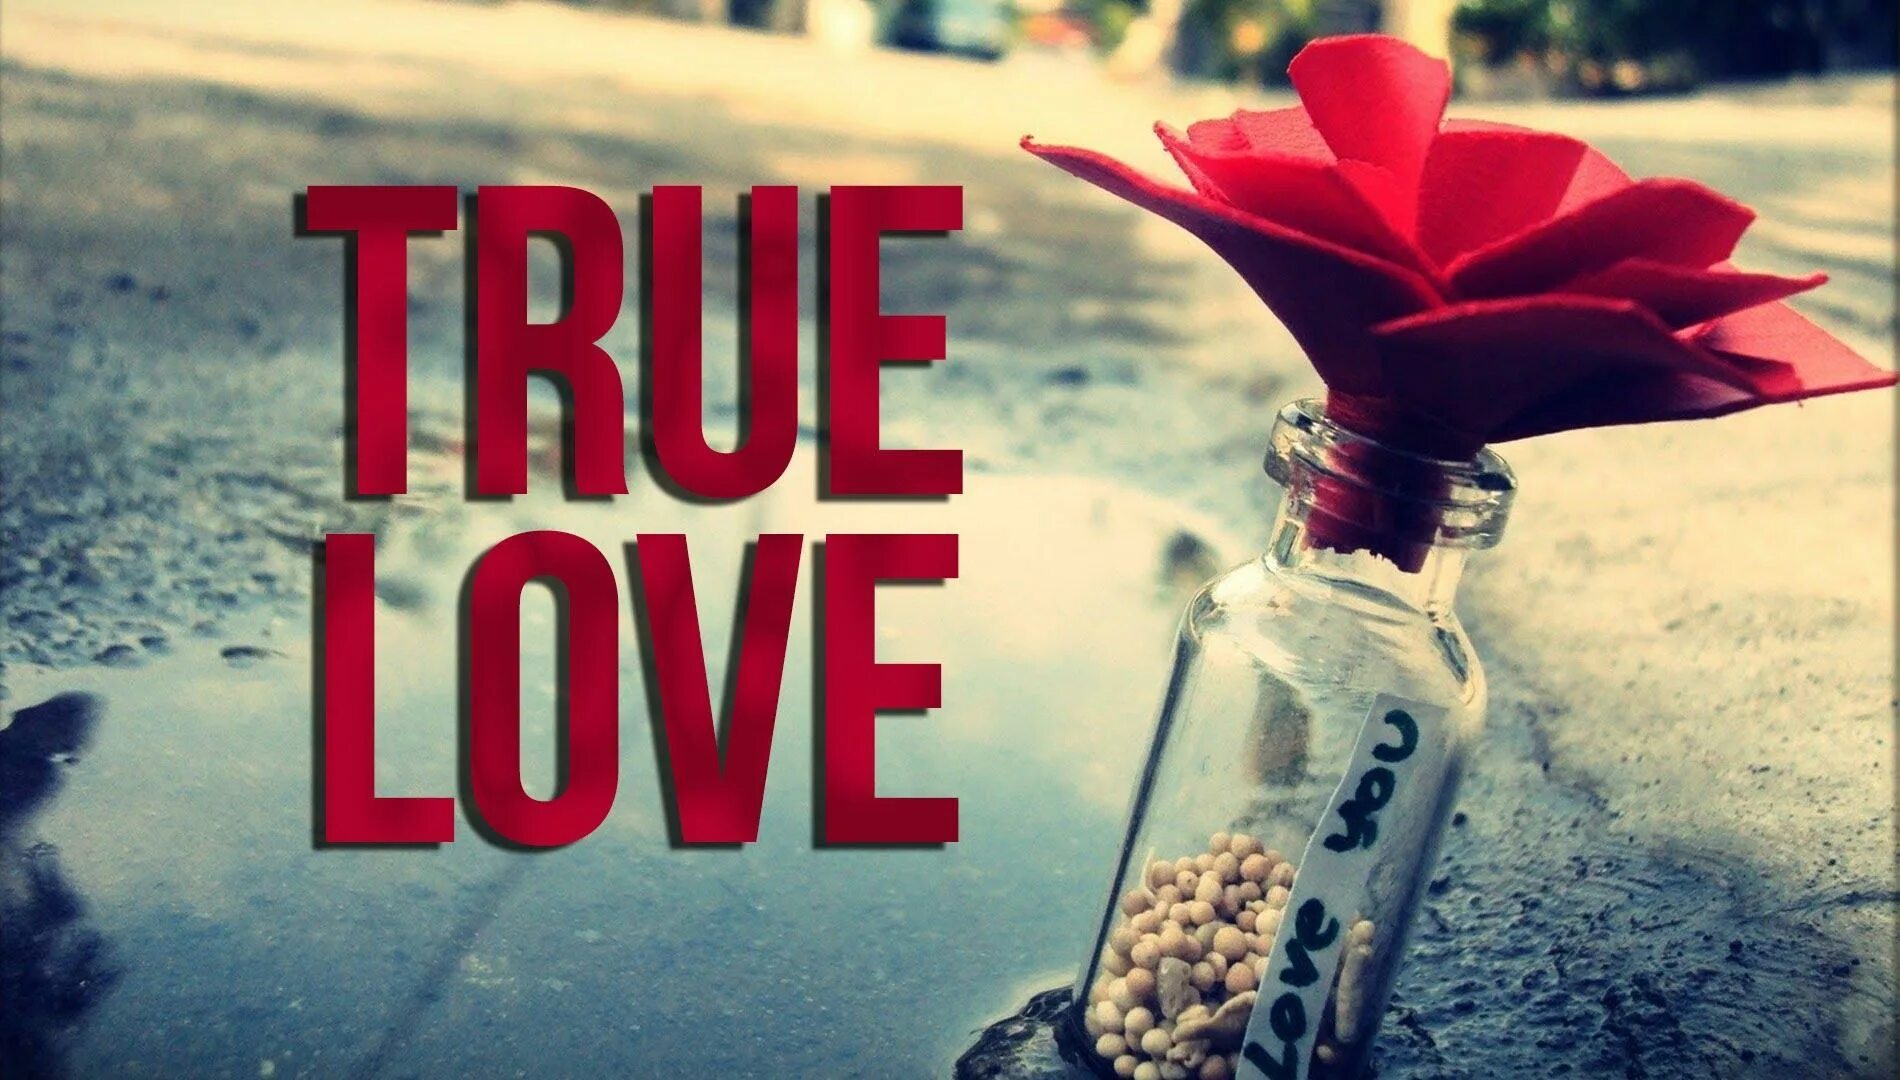 True love текст. True Love. Картинка true Love. True Love Телеканал. Картинки косметика красиво.